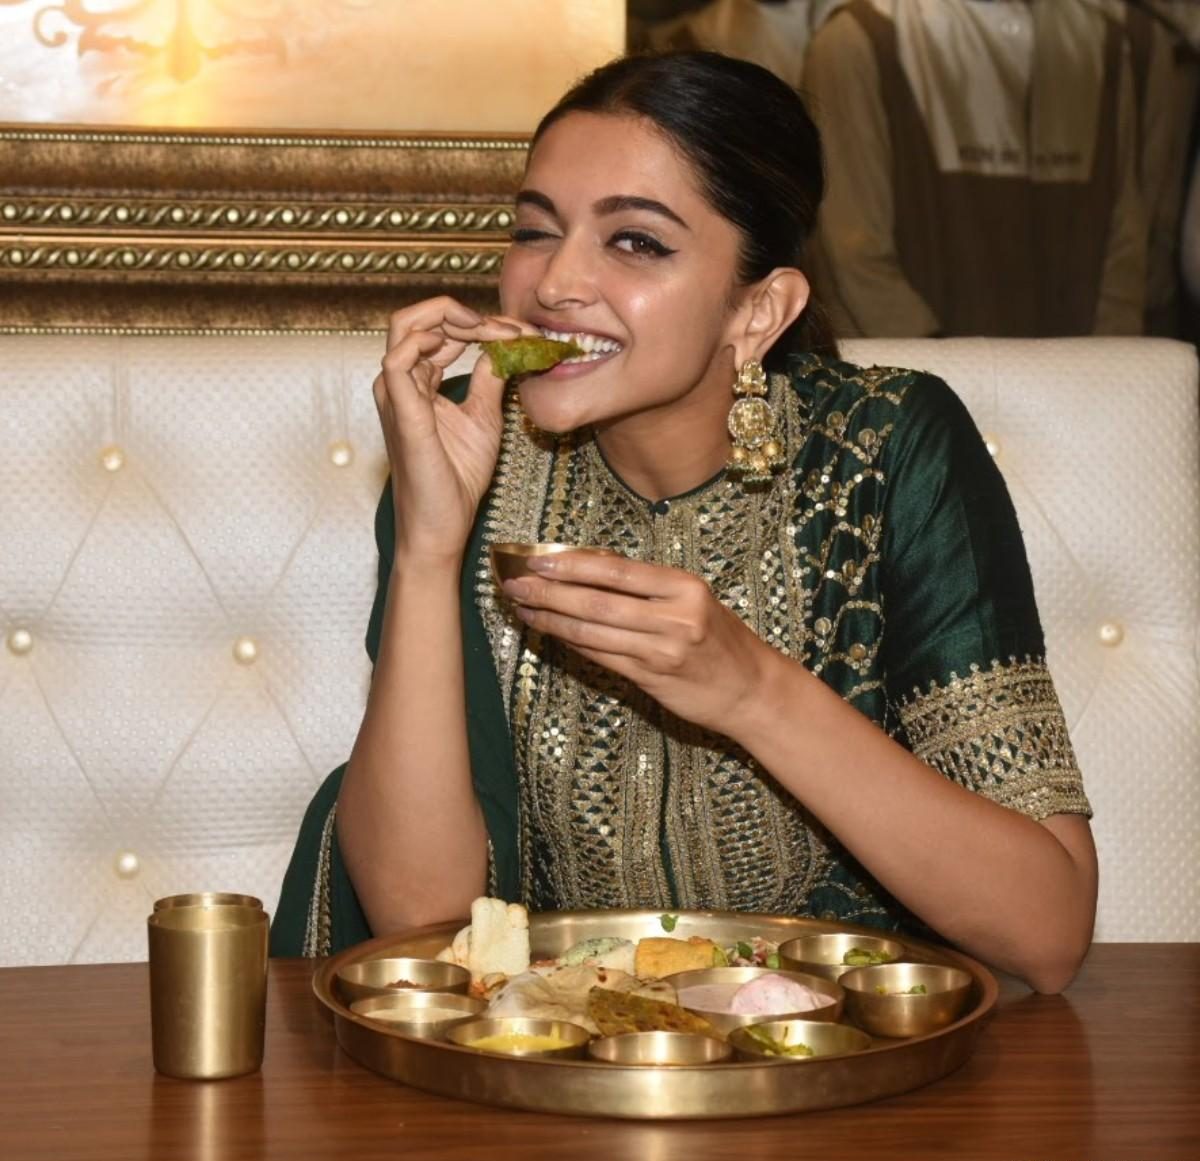 deepika padukone enjoying a rajasthani thali in the throwback photos show her foodie side 1 e1609418865208